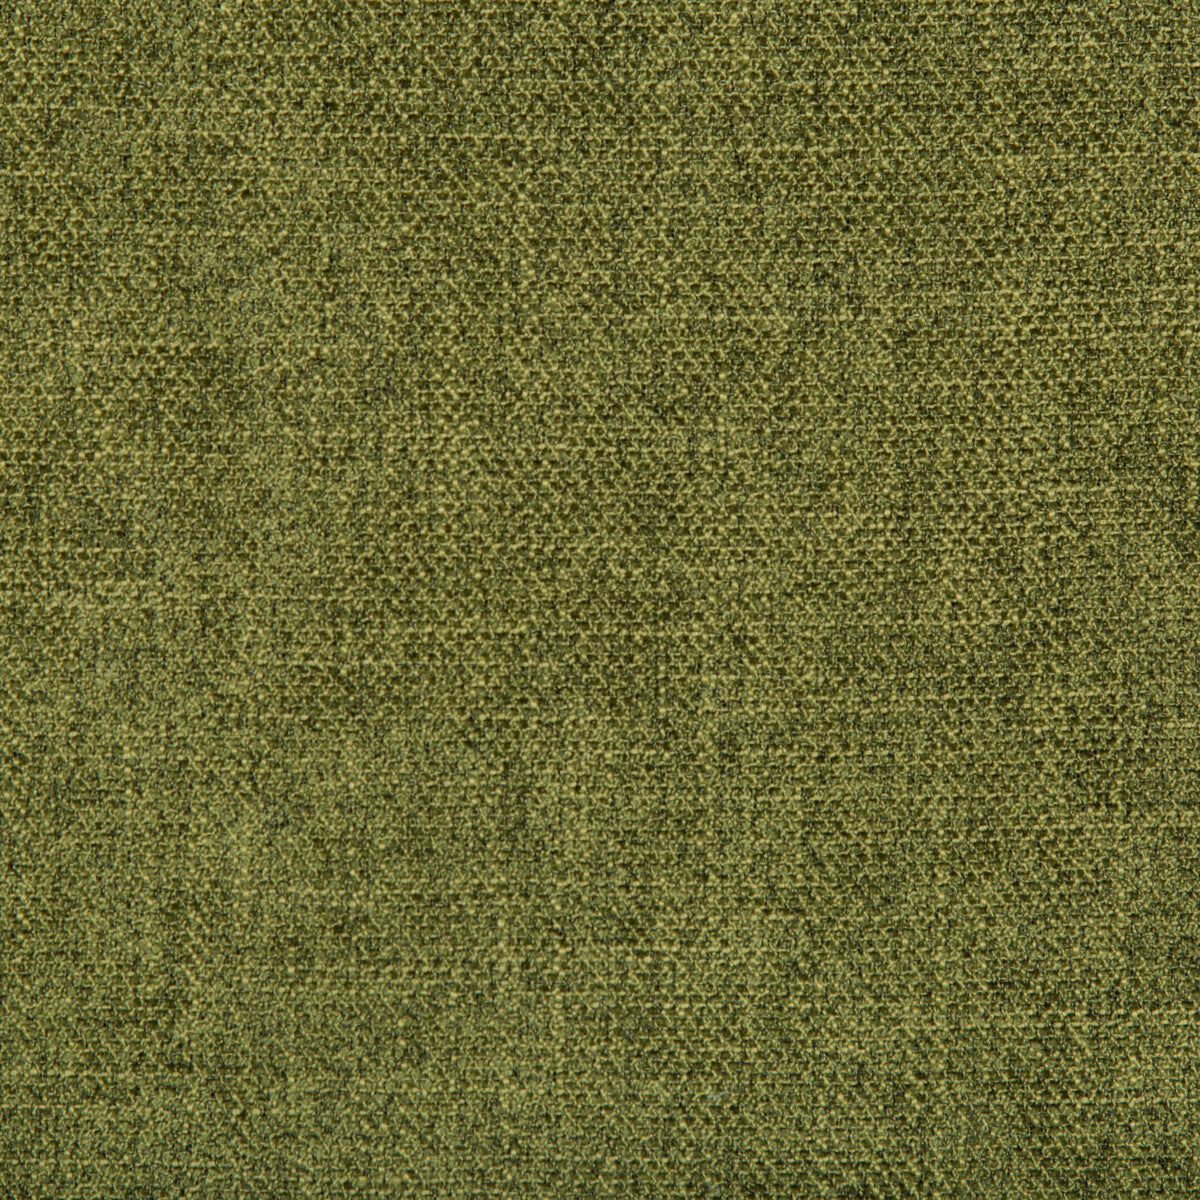 Kf Smt fabric - pattern 35060.303.0 - by Kravet Smart in the Performance Kravetarmor collection